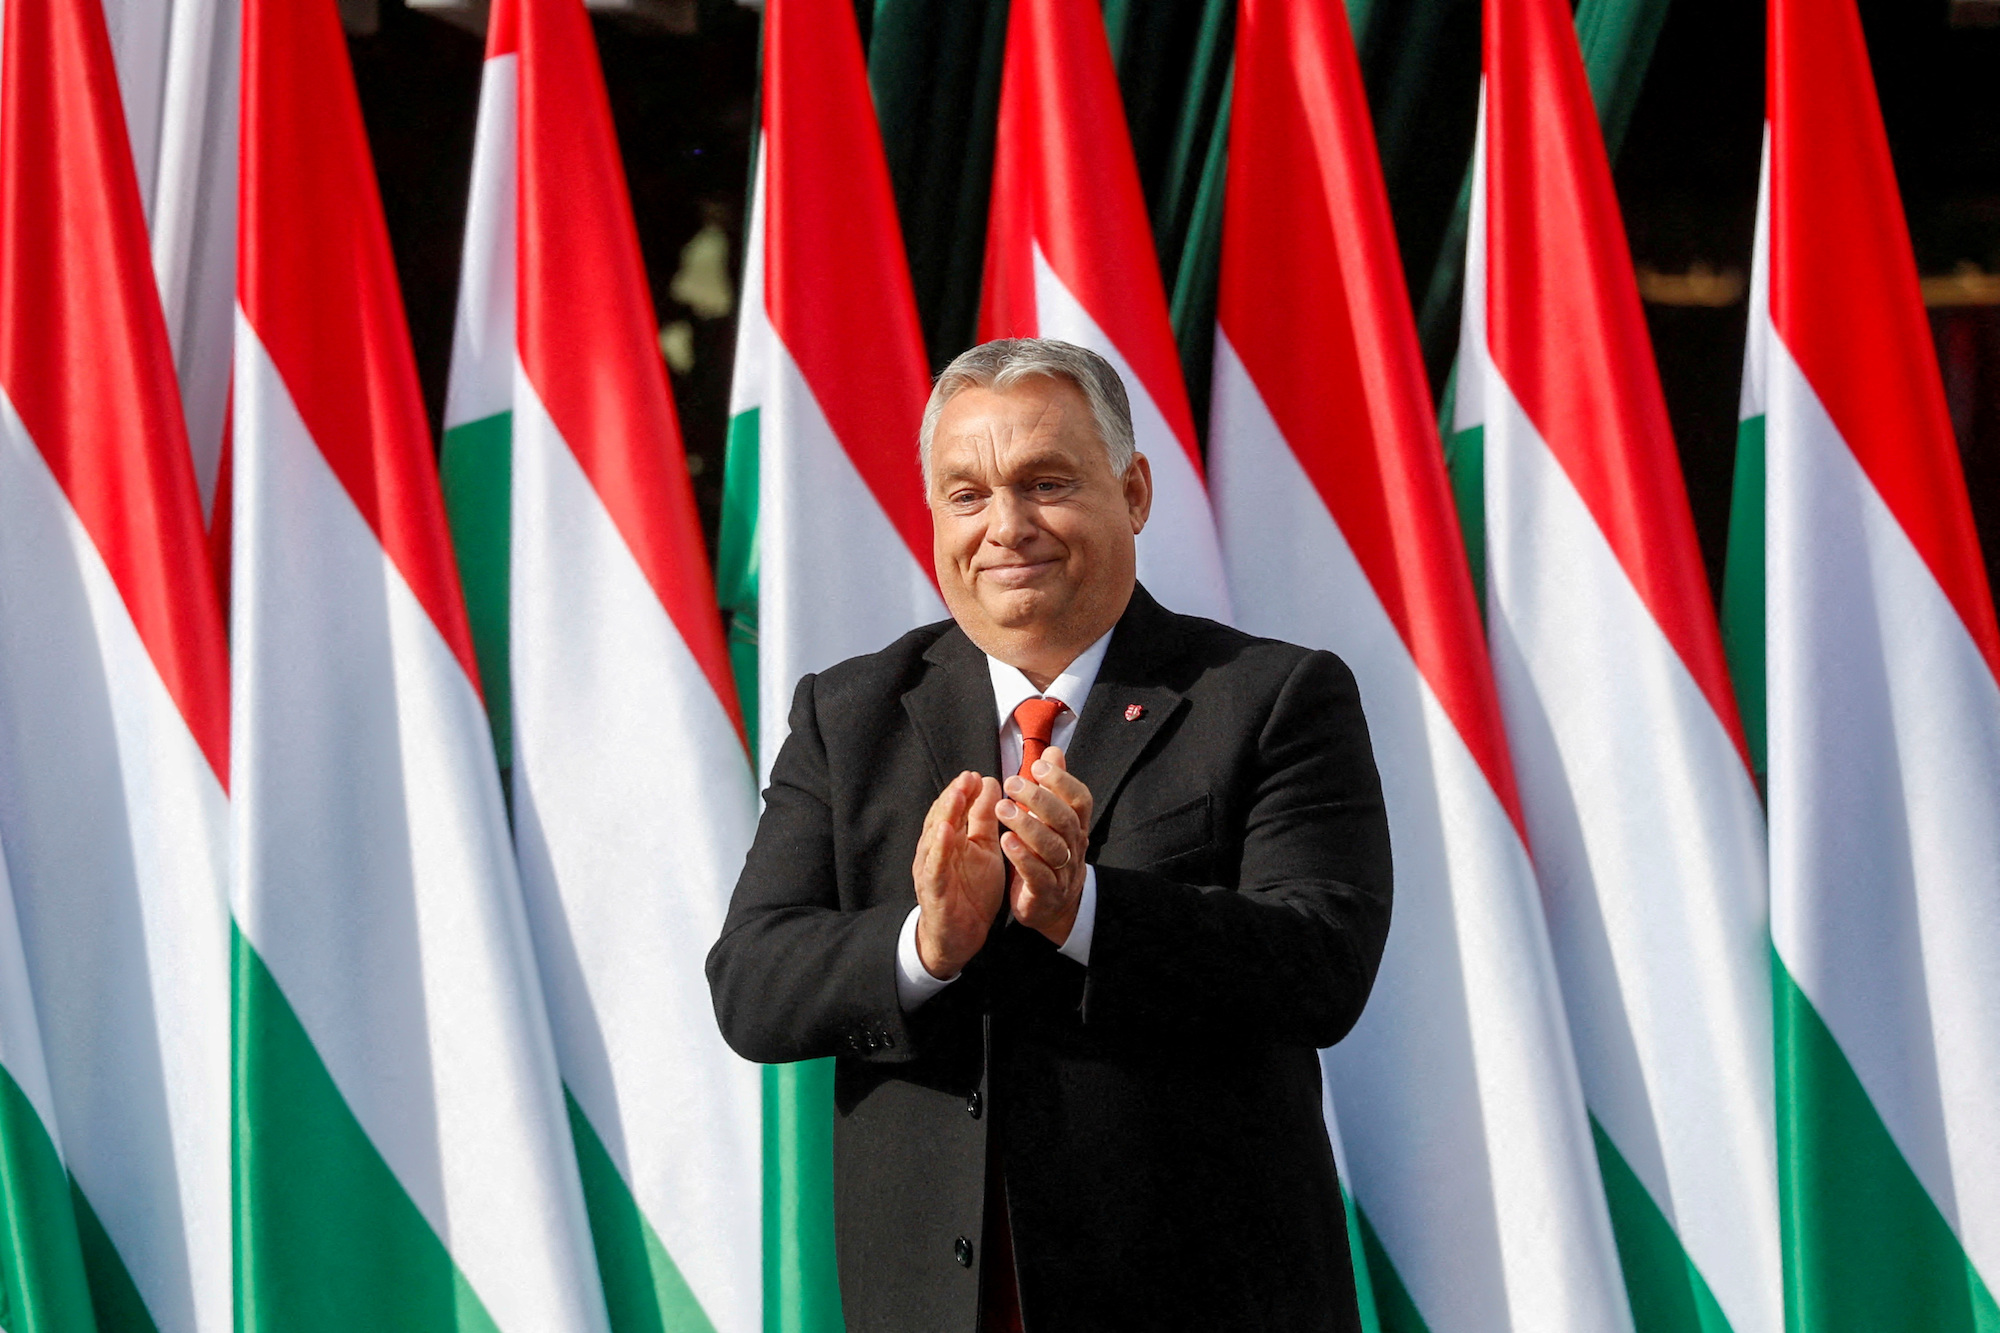 Hungarian Prime Minister Viktor Orban in Zalaegerszeg, Hungary, on October 23.